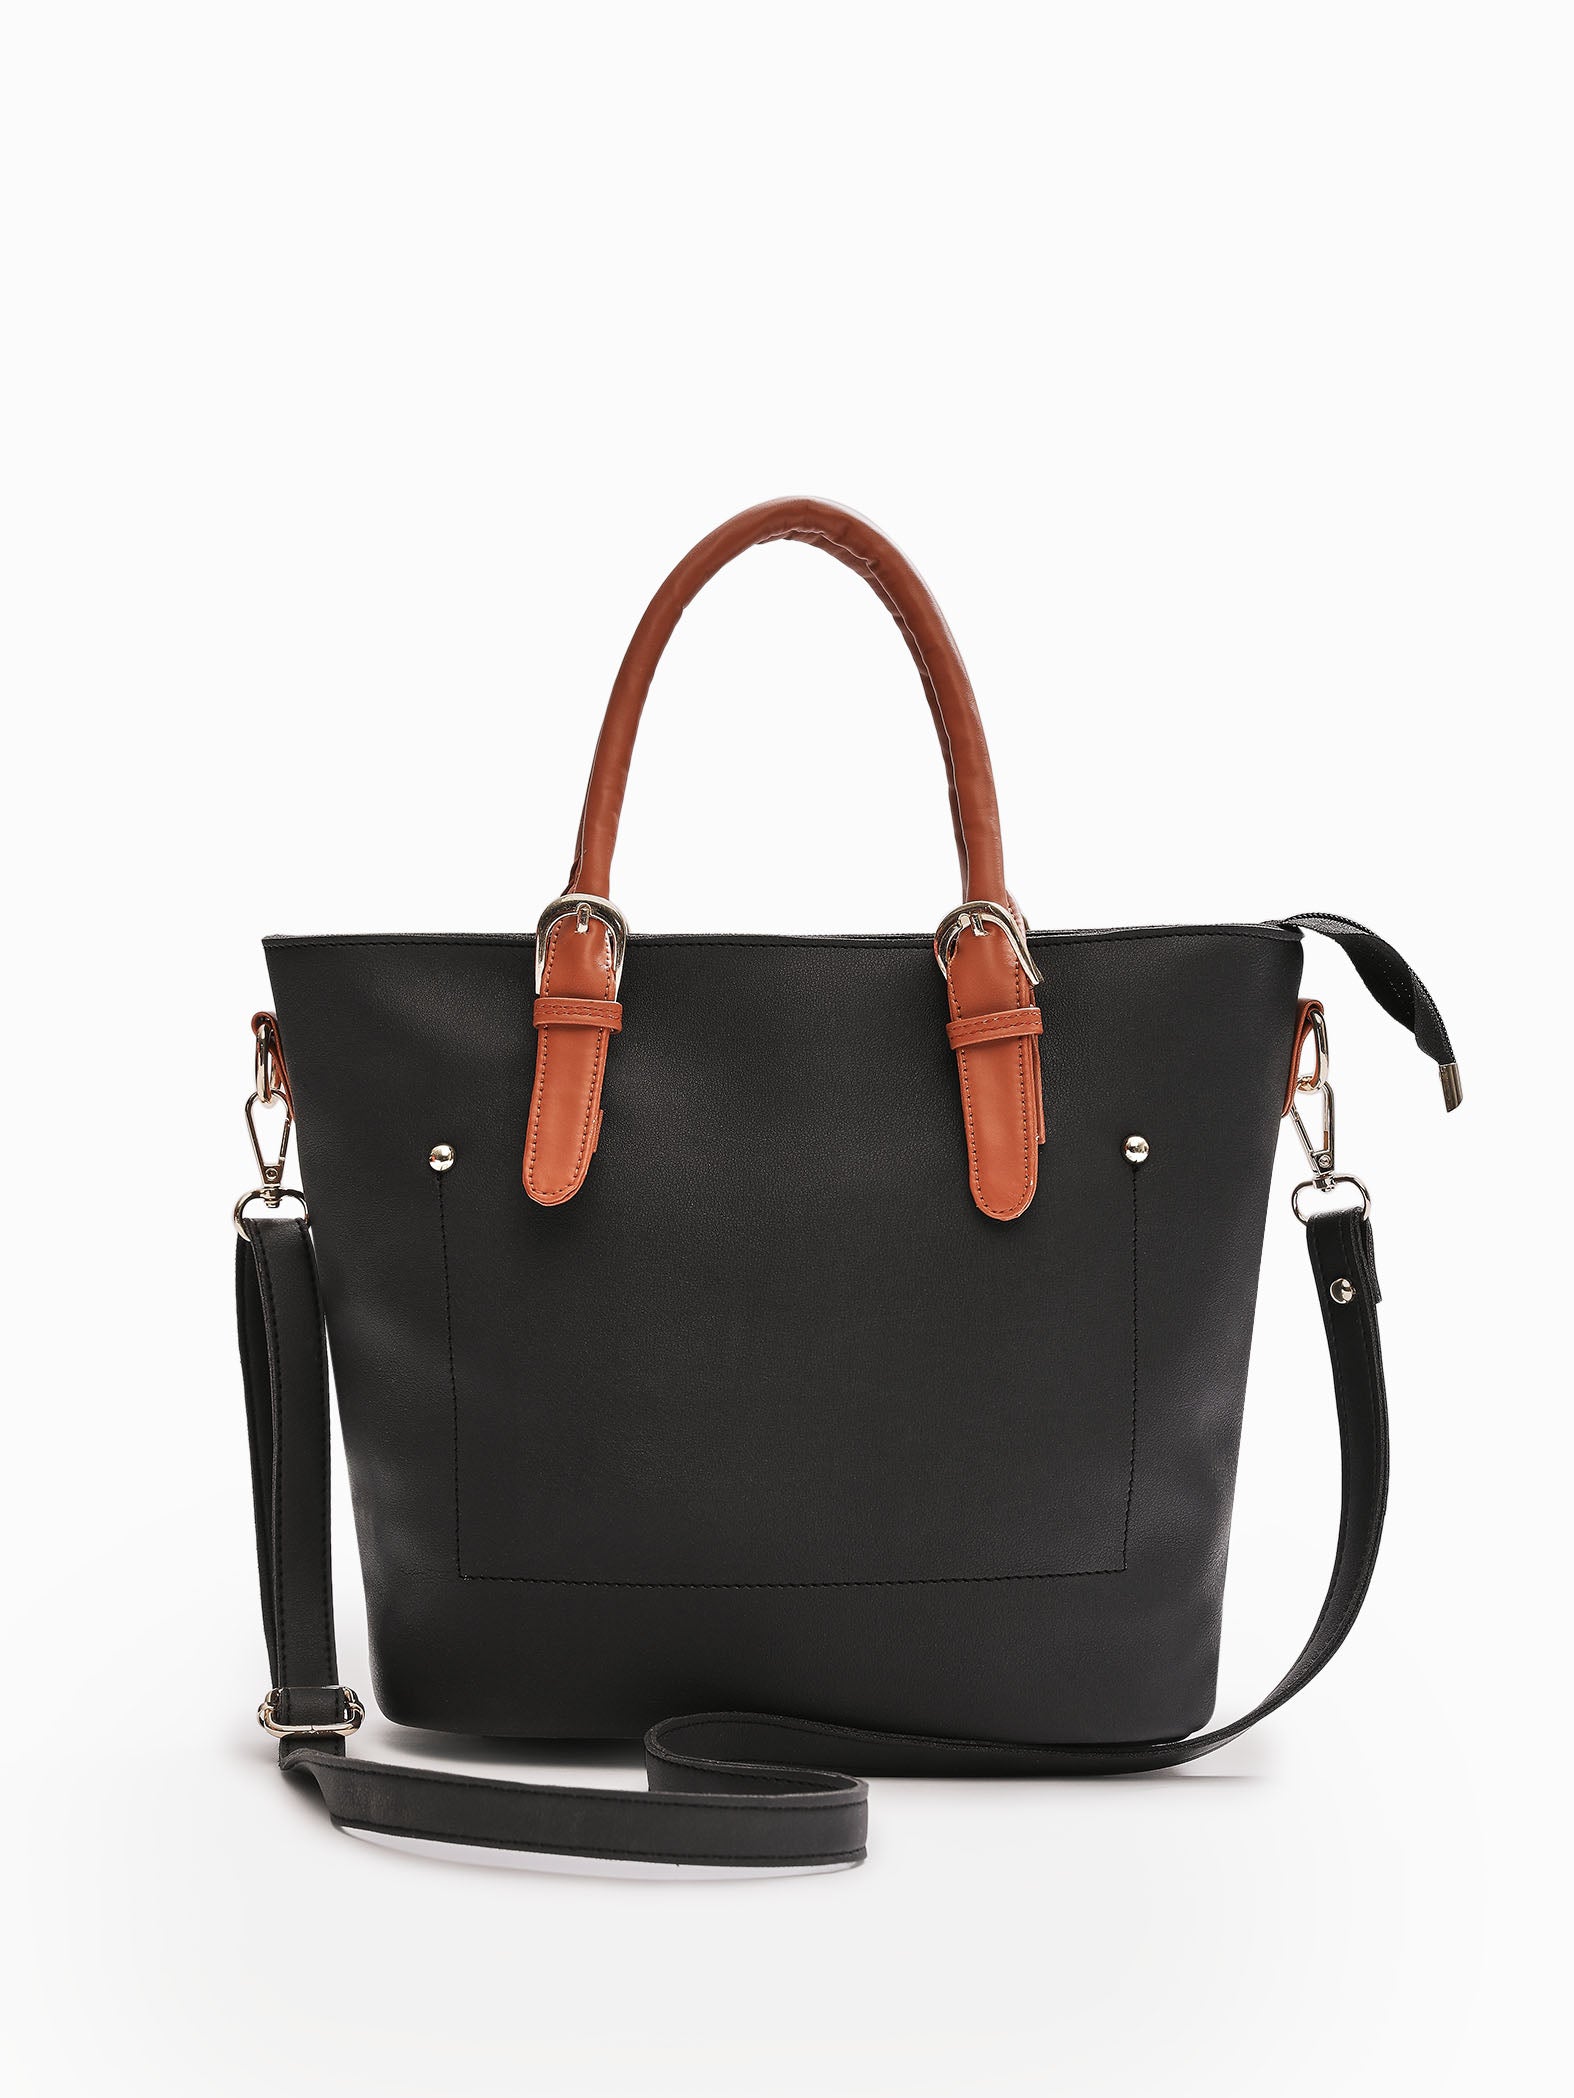 Black Handbag with Brown Handle